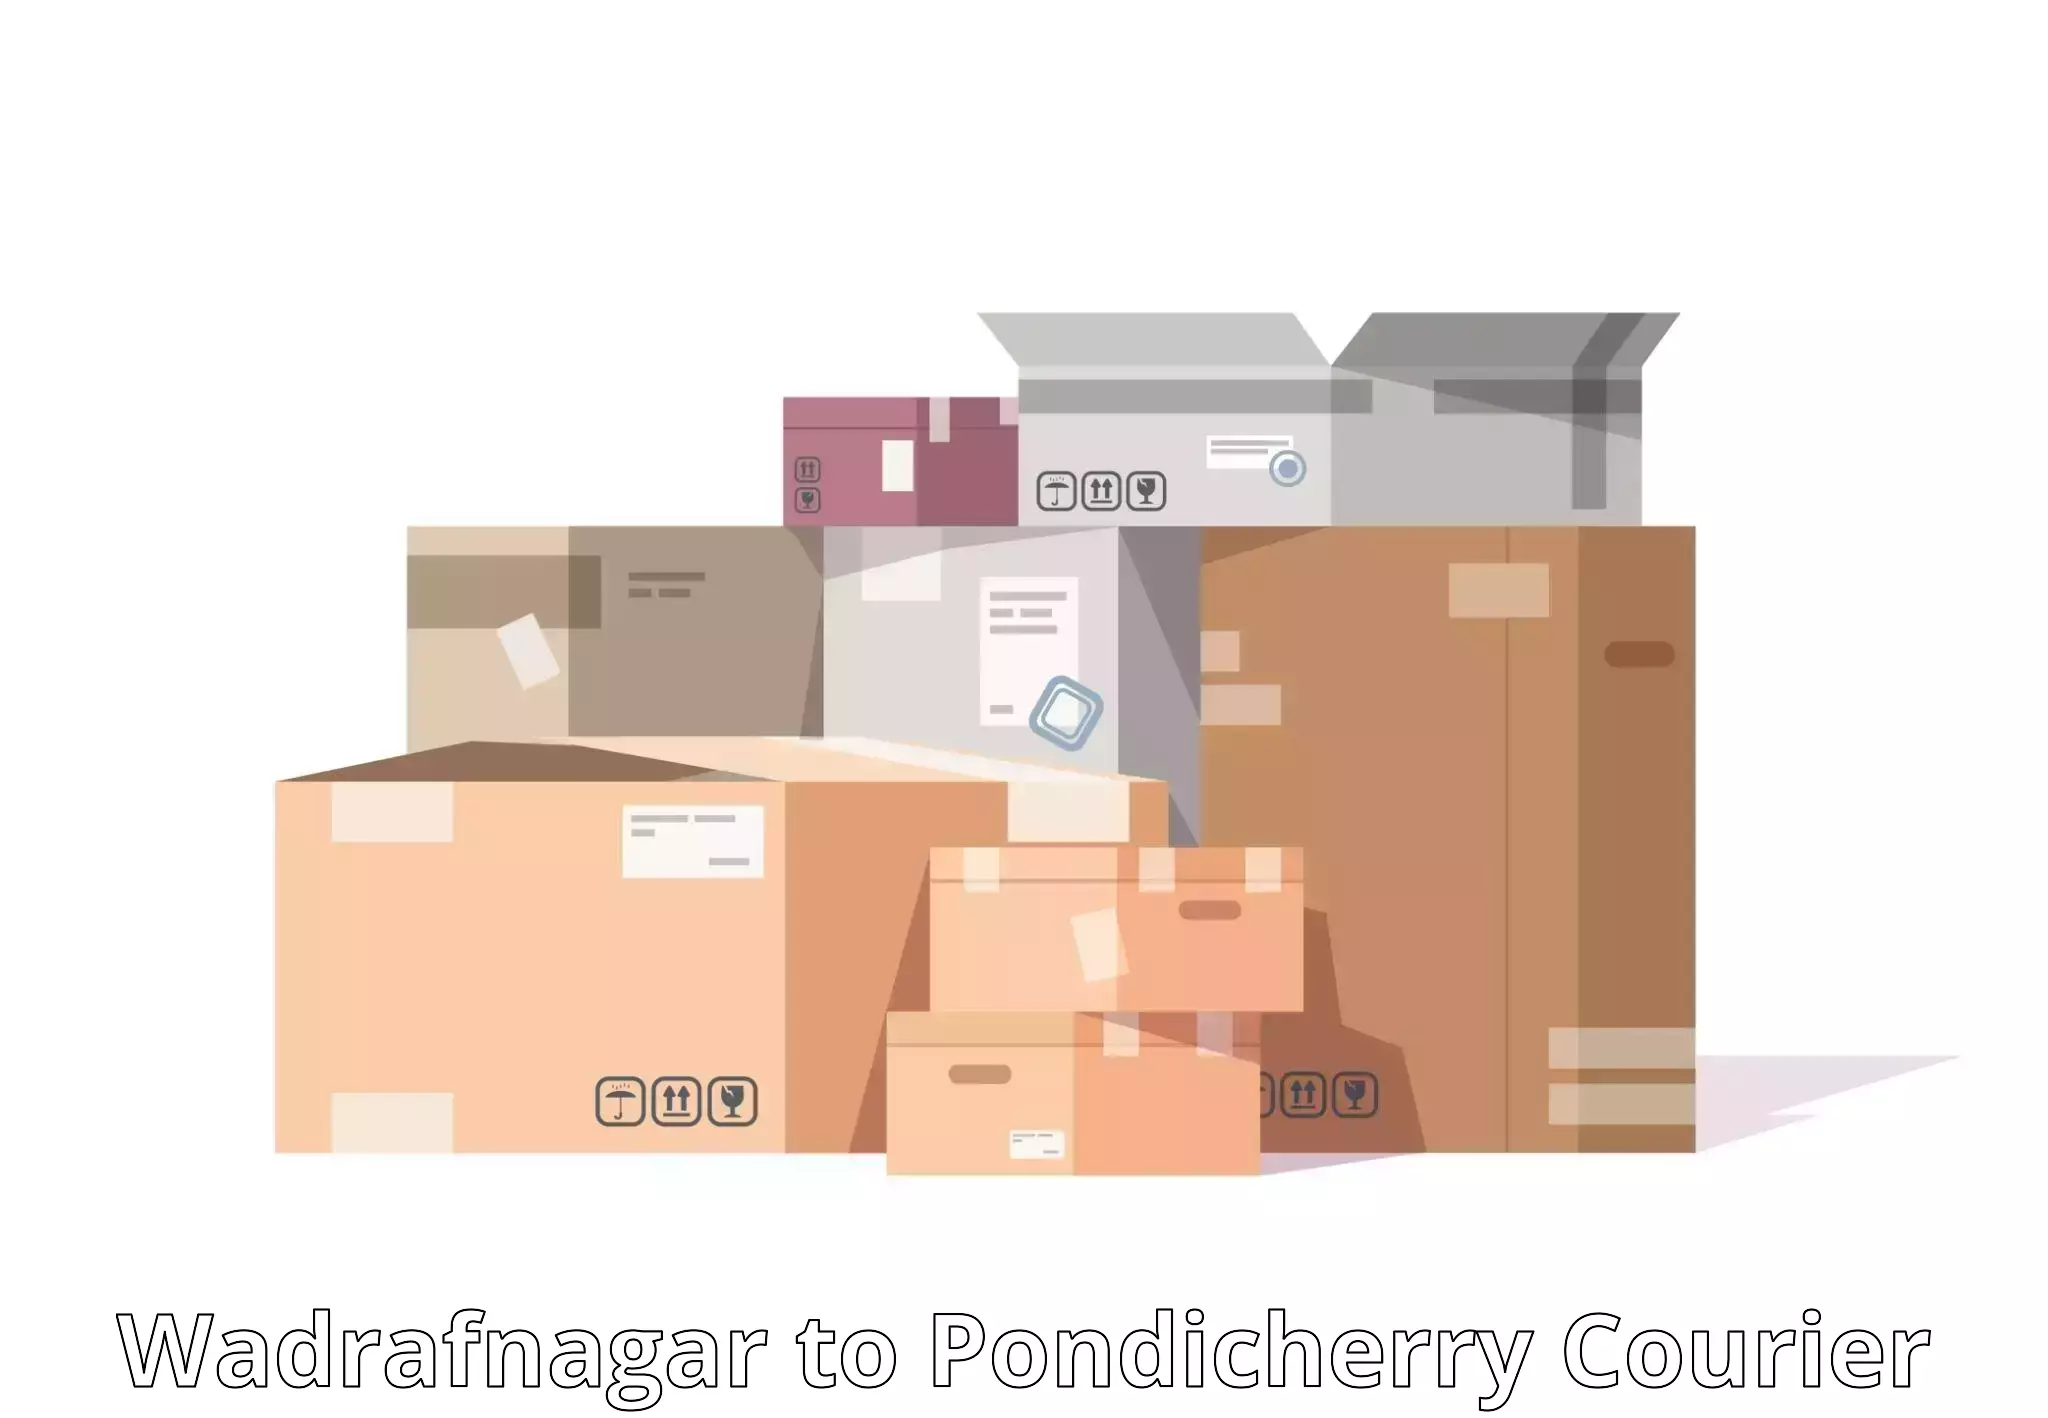 Express courier capabilities Wadrafnagar to Pondicherry University